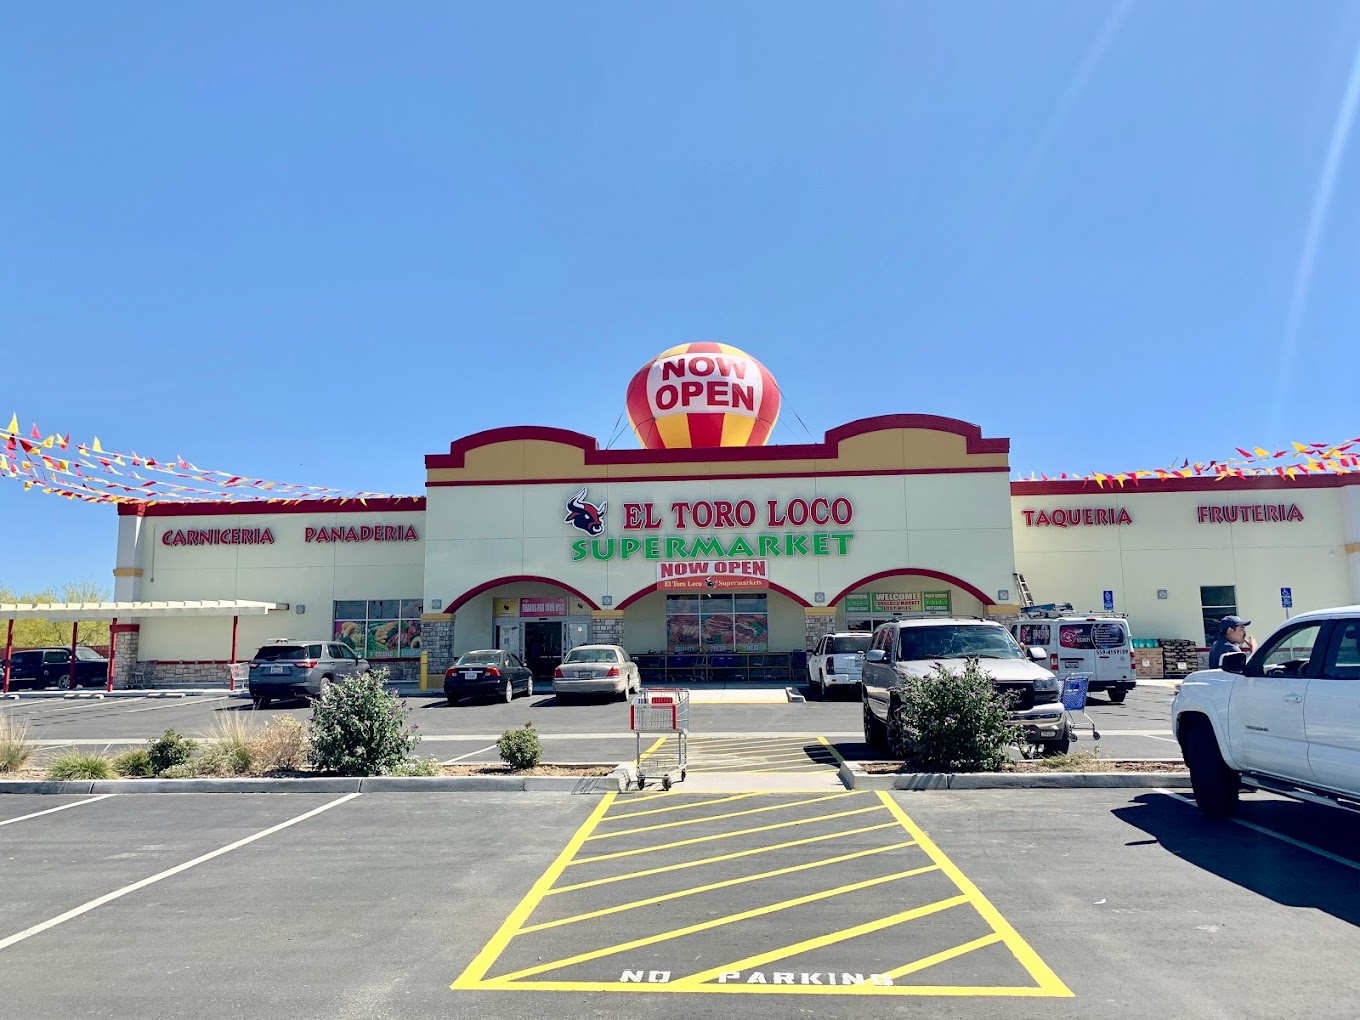 El Toro Loco Supermarkets Fresno California